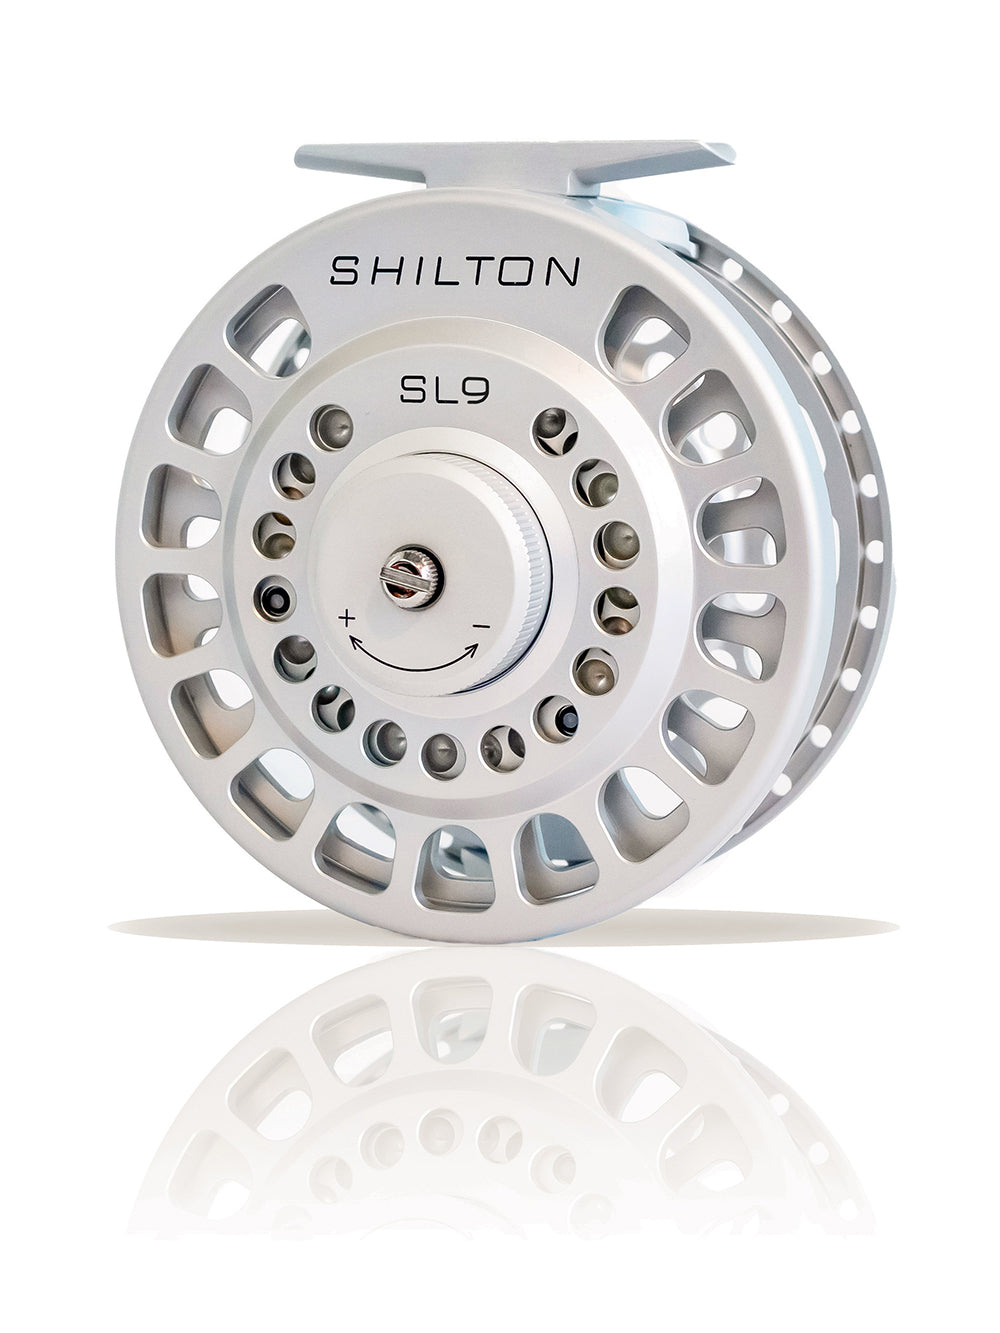 Shilton SL6 Reels (9-10wt) SL9 in Titanium Silver